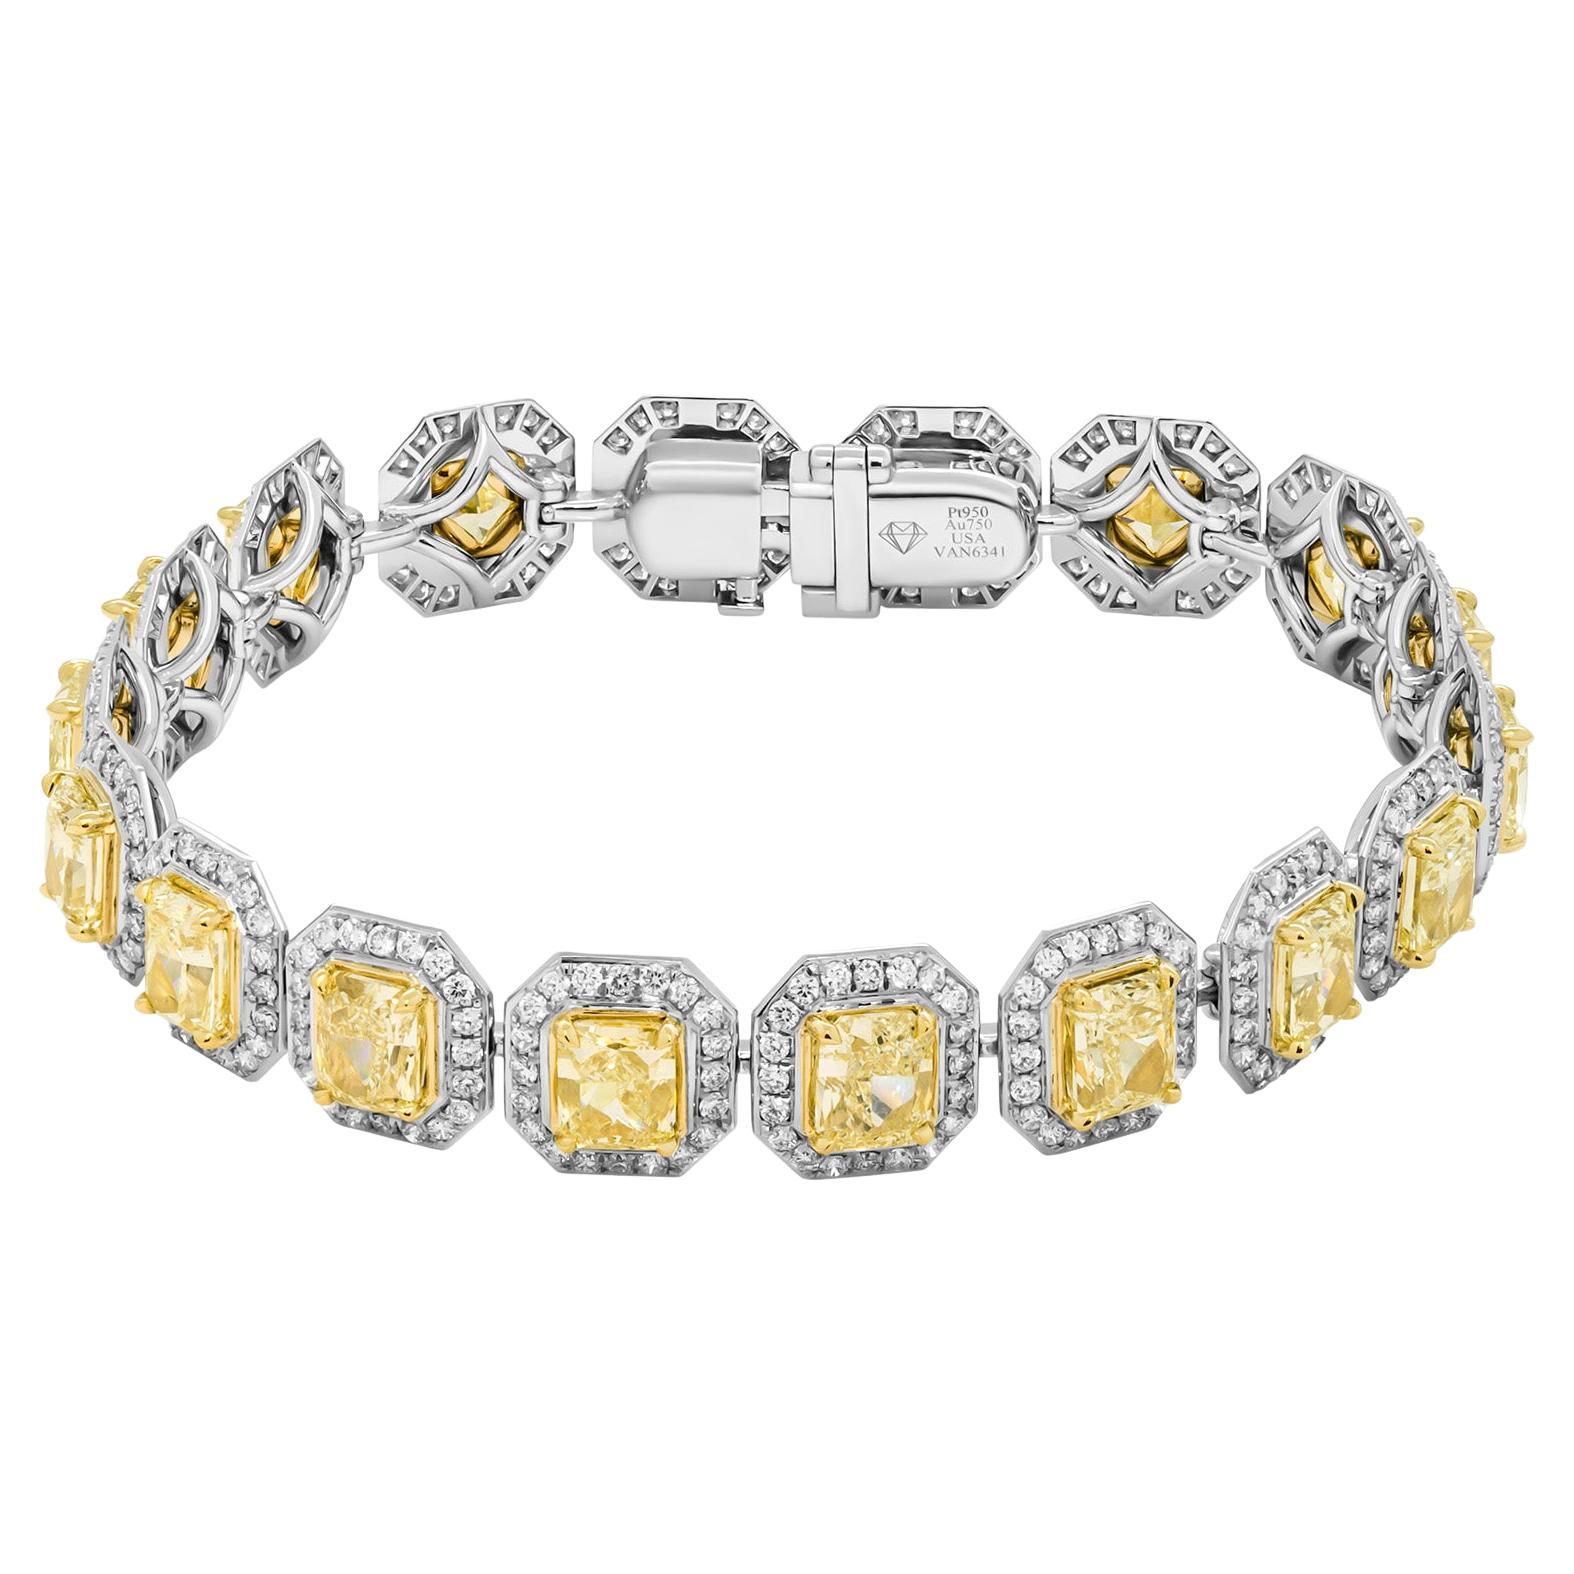 GIA Certified Tennis bracelet with Yellow Radiant Cut Diamonds